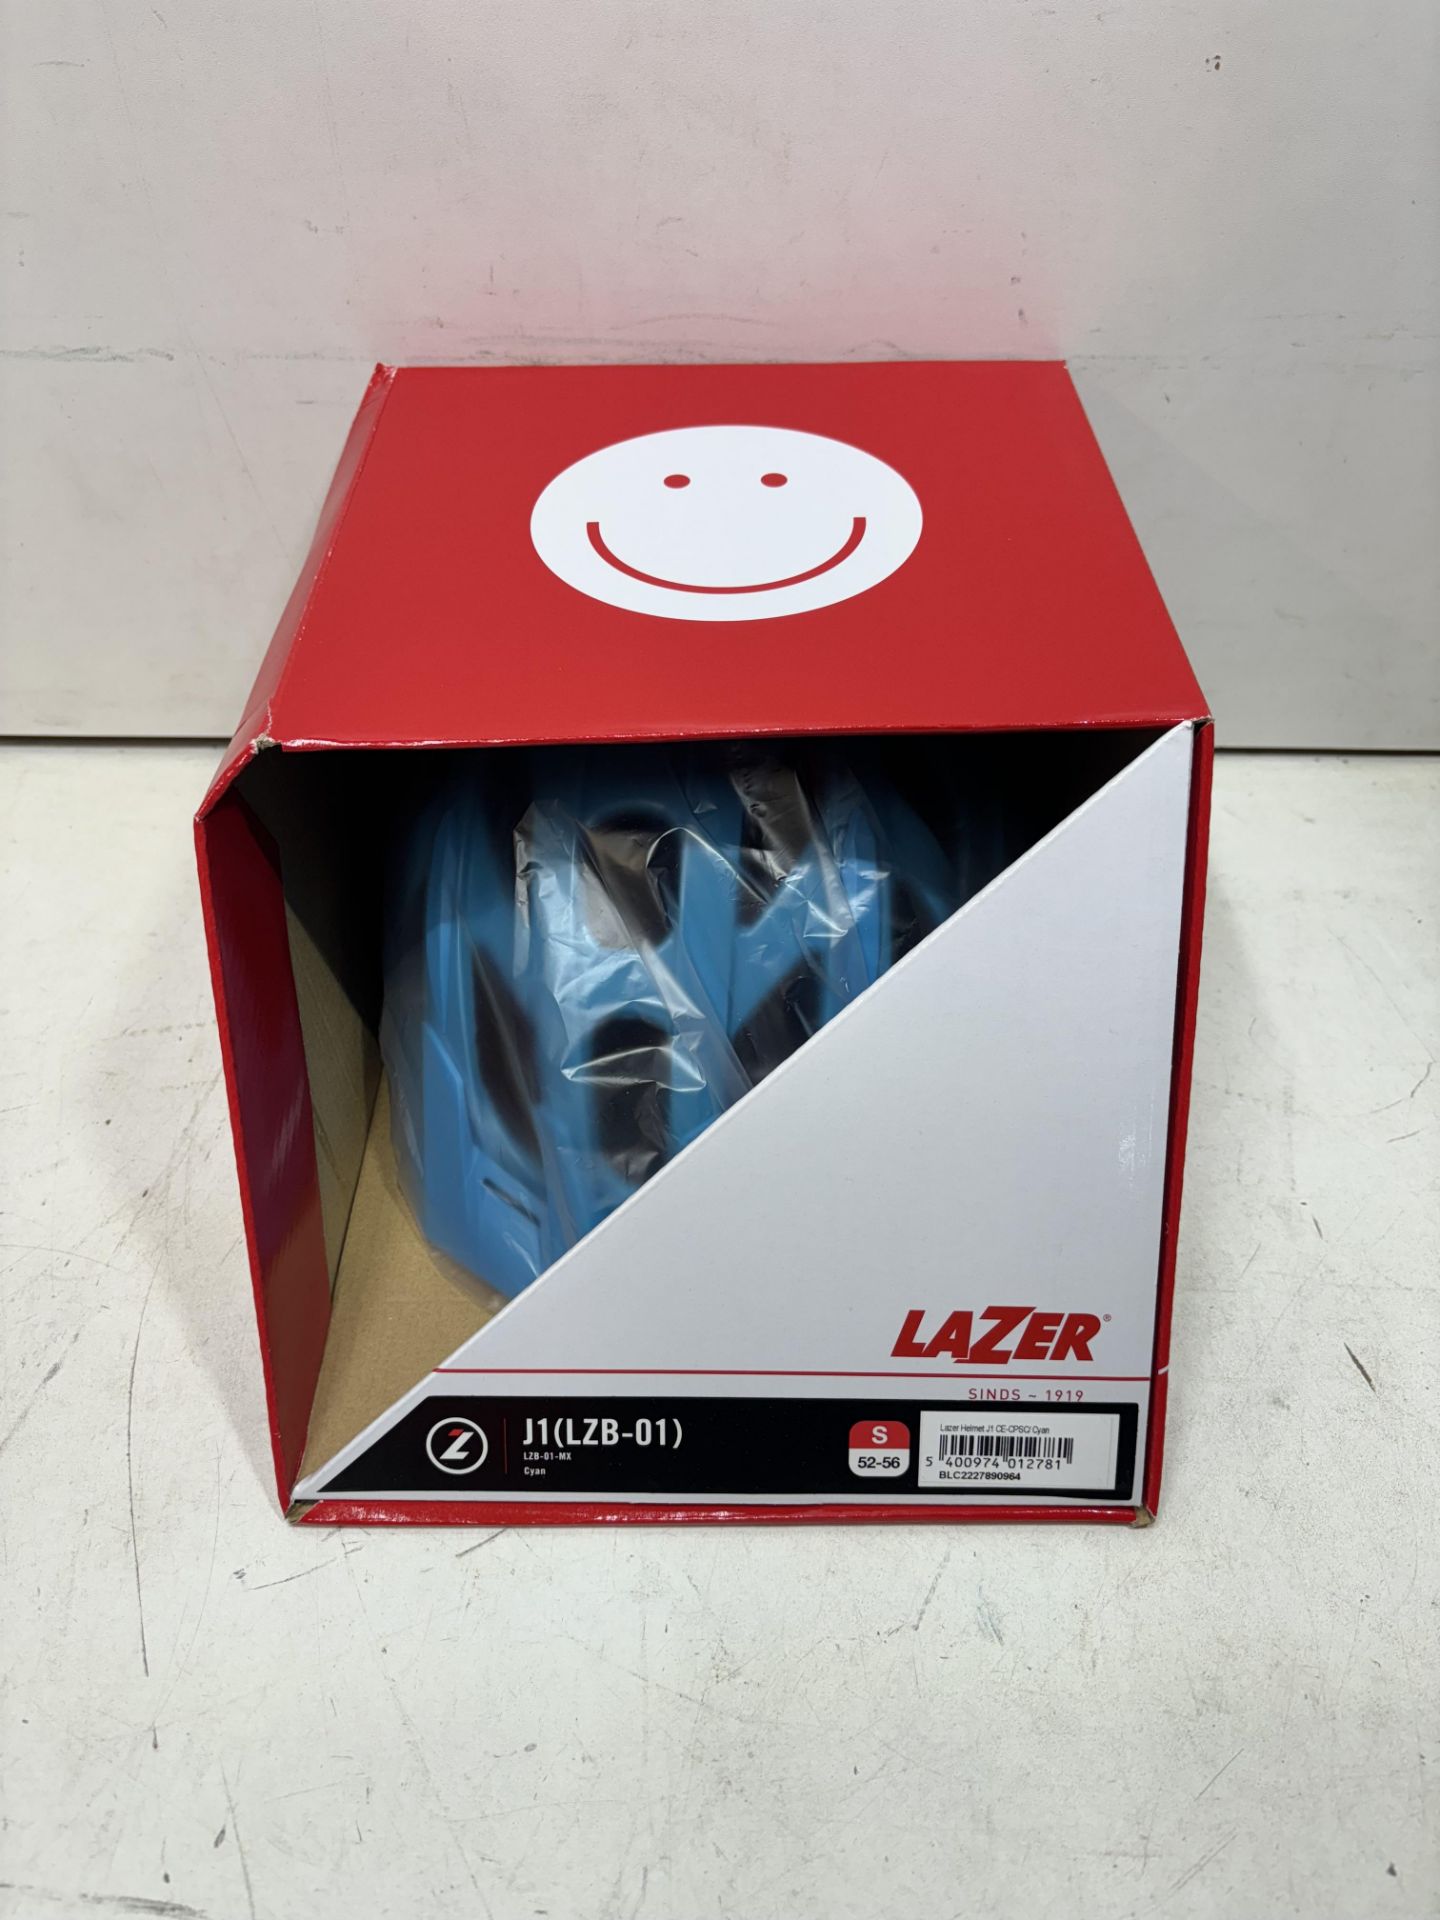 Lazer J1(Lzb-01) Mtb Cycle Helmet, Size S (52-56Cm) - Image 2 of 3